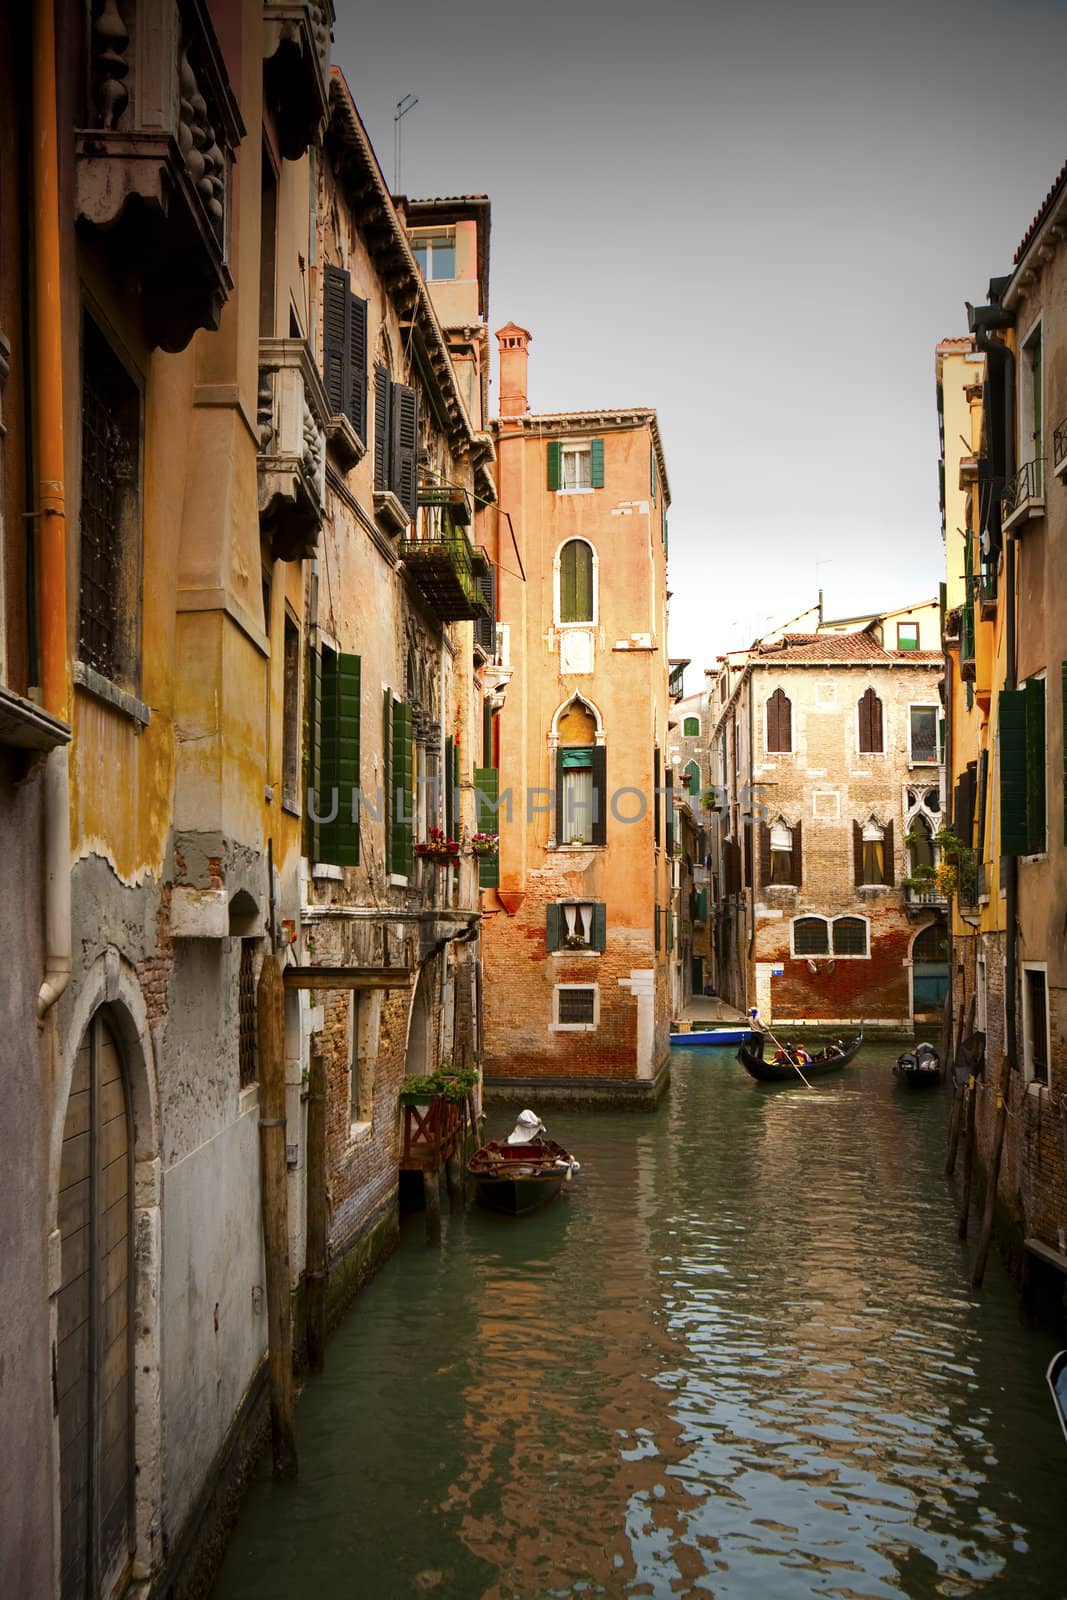  Gondola on the Canal of Venice, Italy.